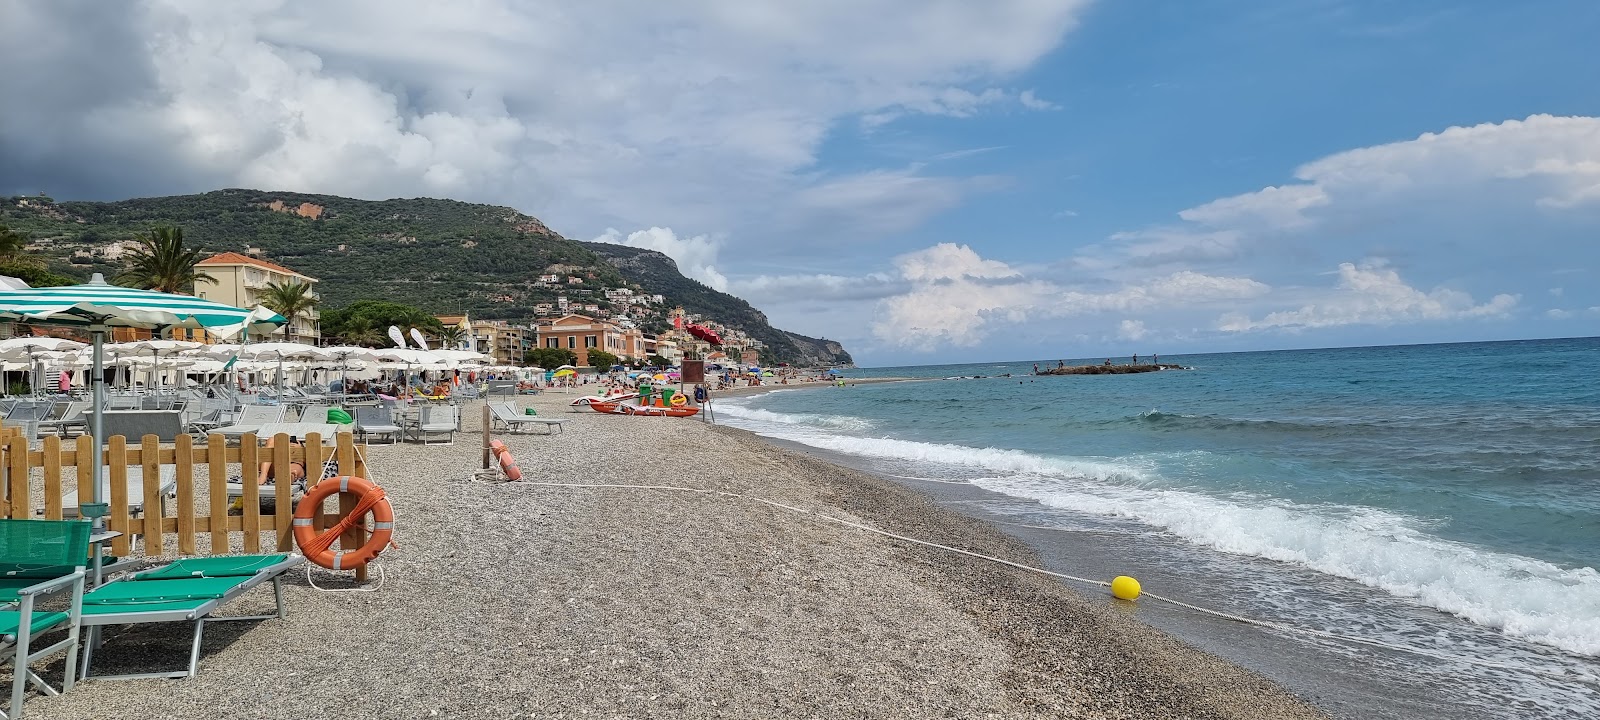 Foto de Spiaggia di Borgio área de resort de praia